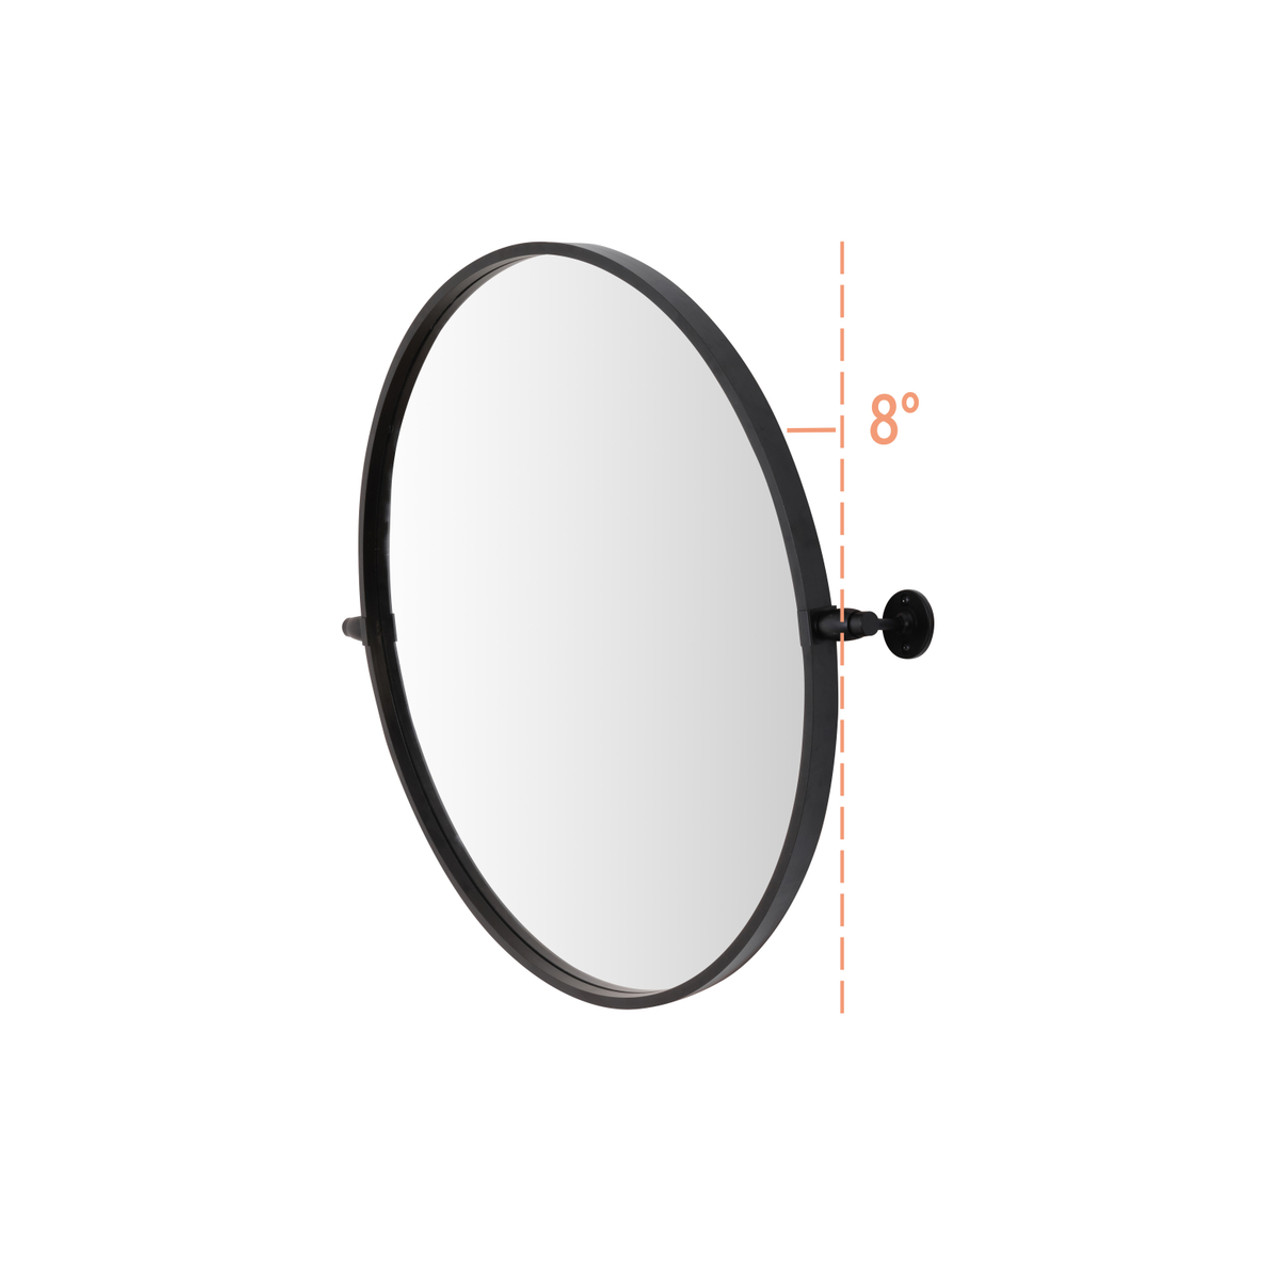 Elegant Décor MR6A2432SIL Soft corner pivot mirror 24x32 inch in silver